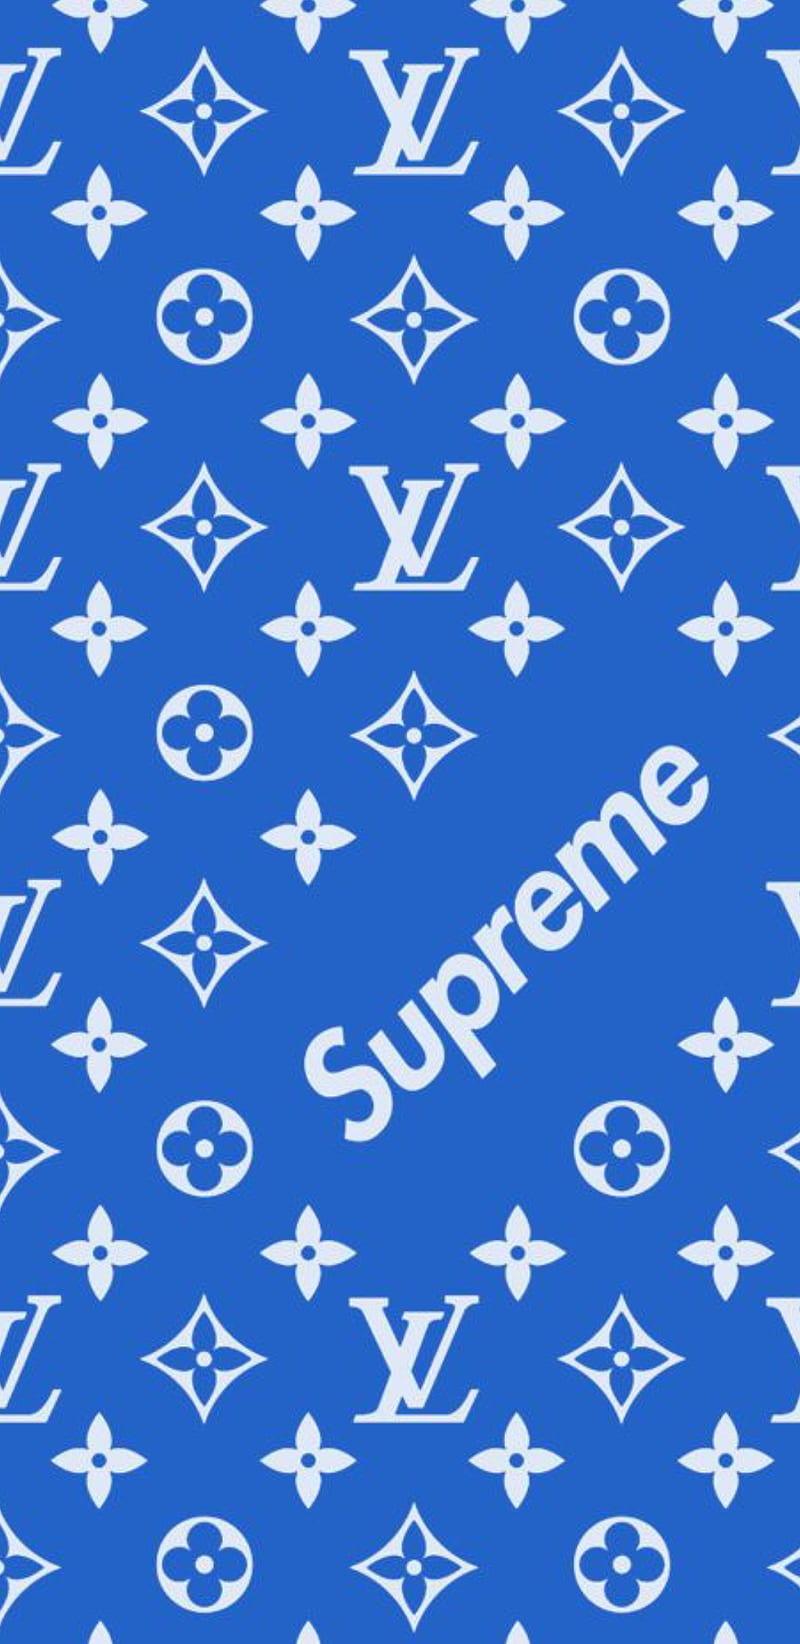 Download Red Supreme Louis Vuitton Sticker Wallpaper